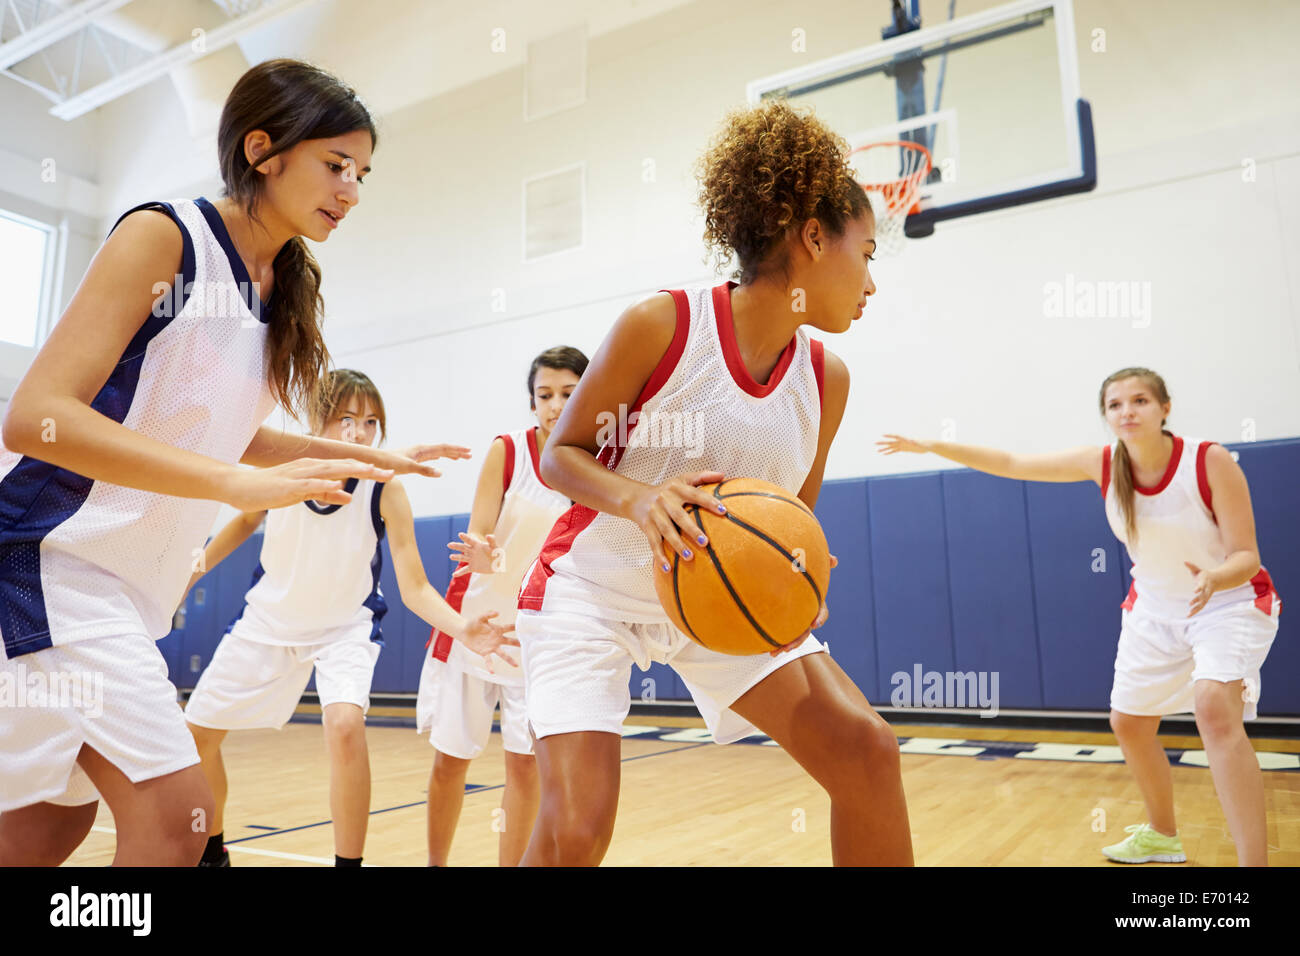 Female High School Basketball Team Playing Game Stock Photo